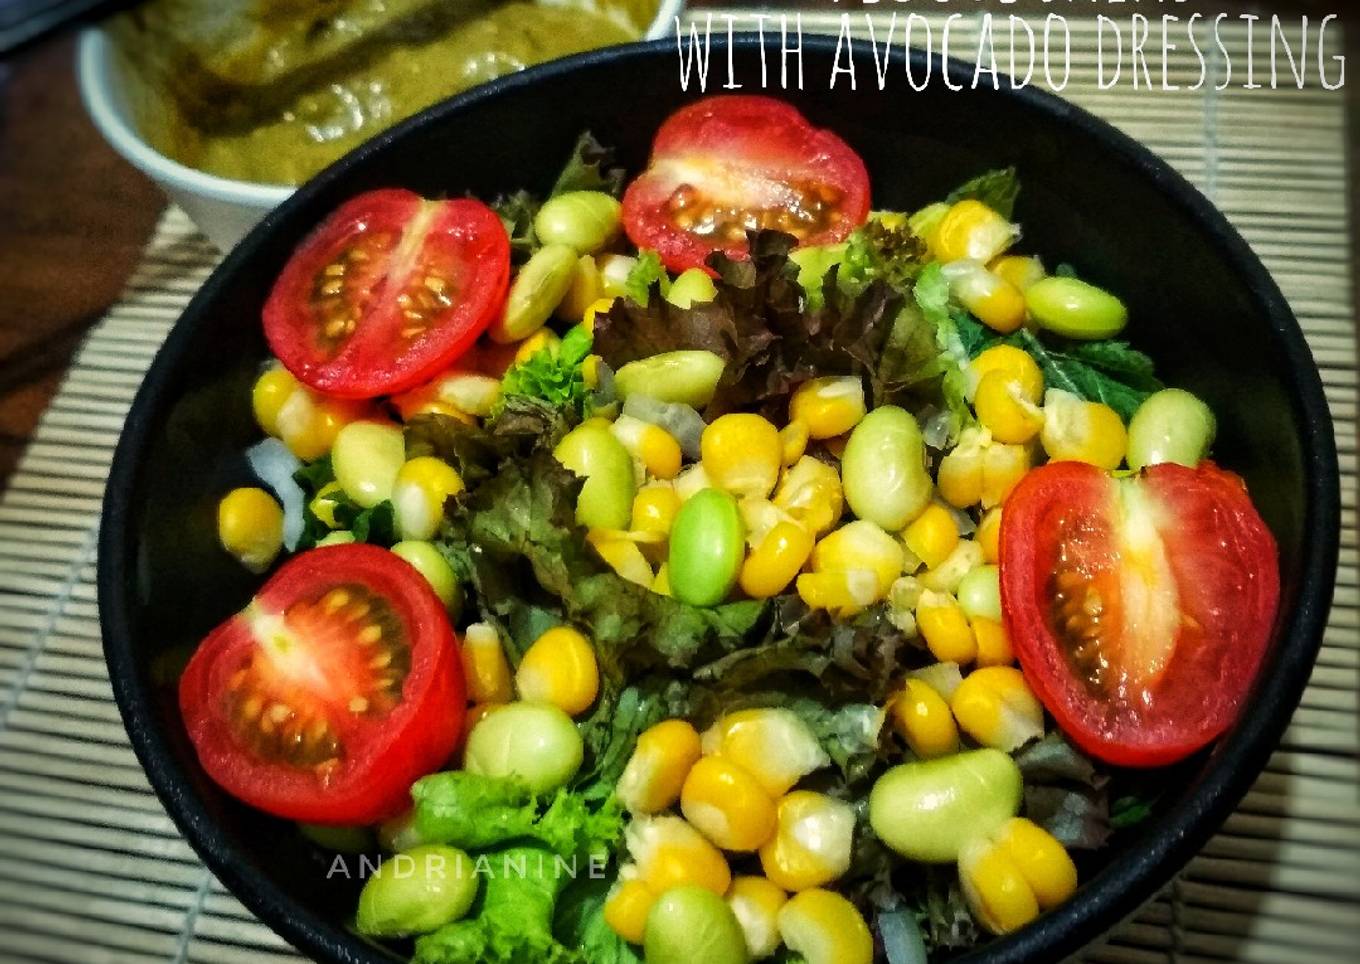 Veggie Salad With Avocado Dressing